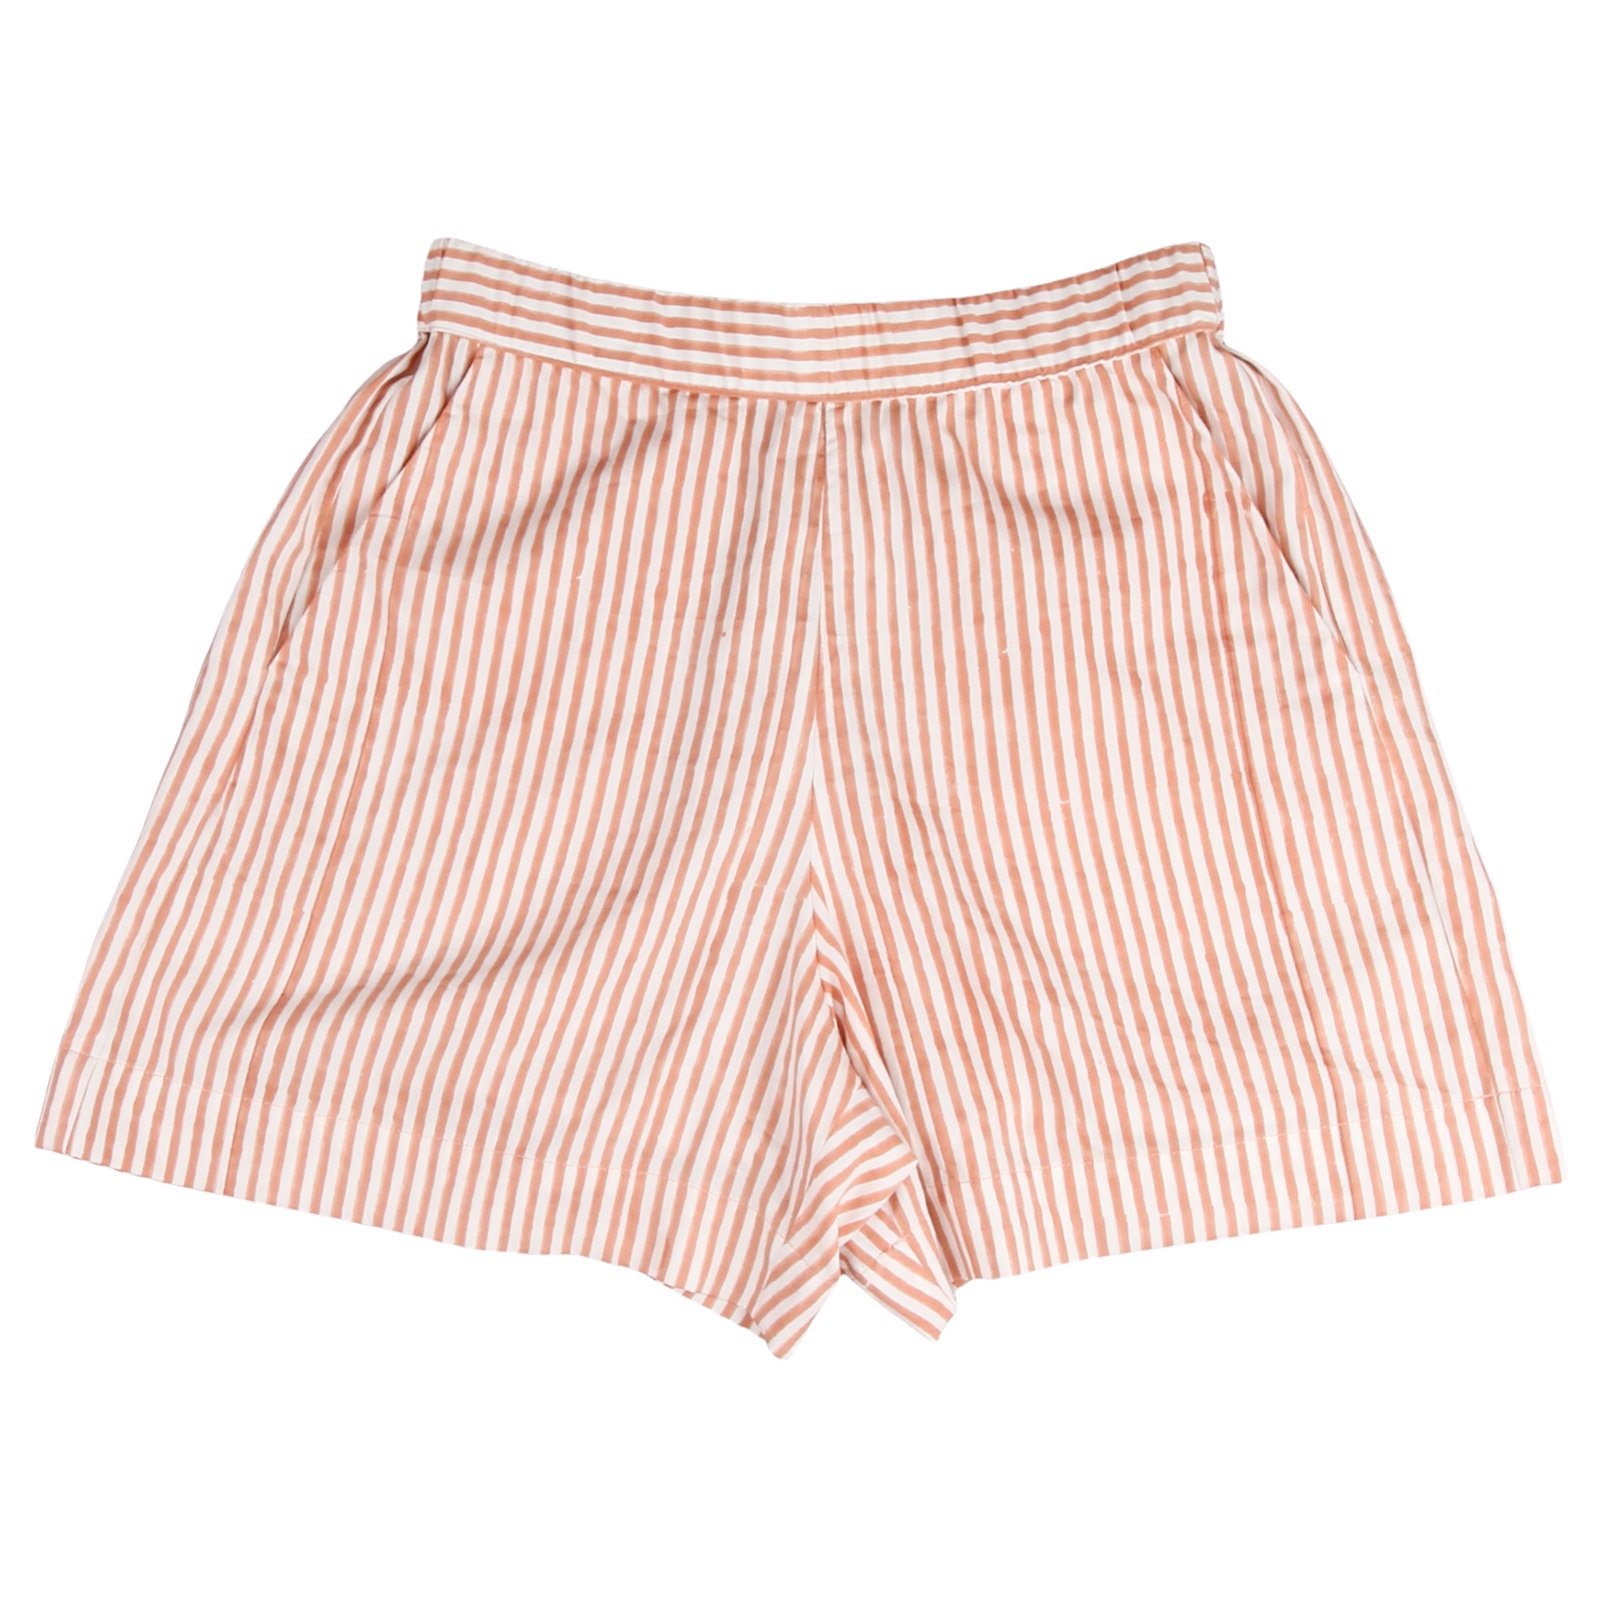 Avis Shorts - Clay Stripe